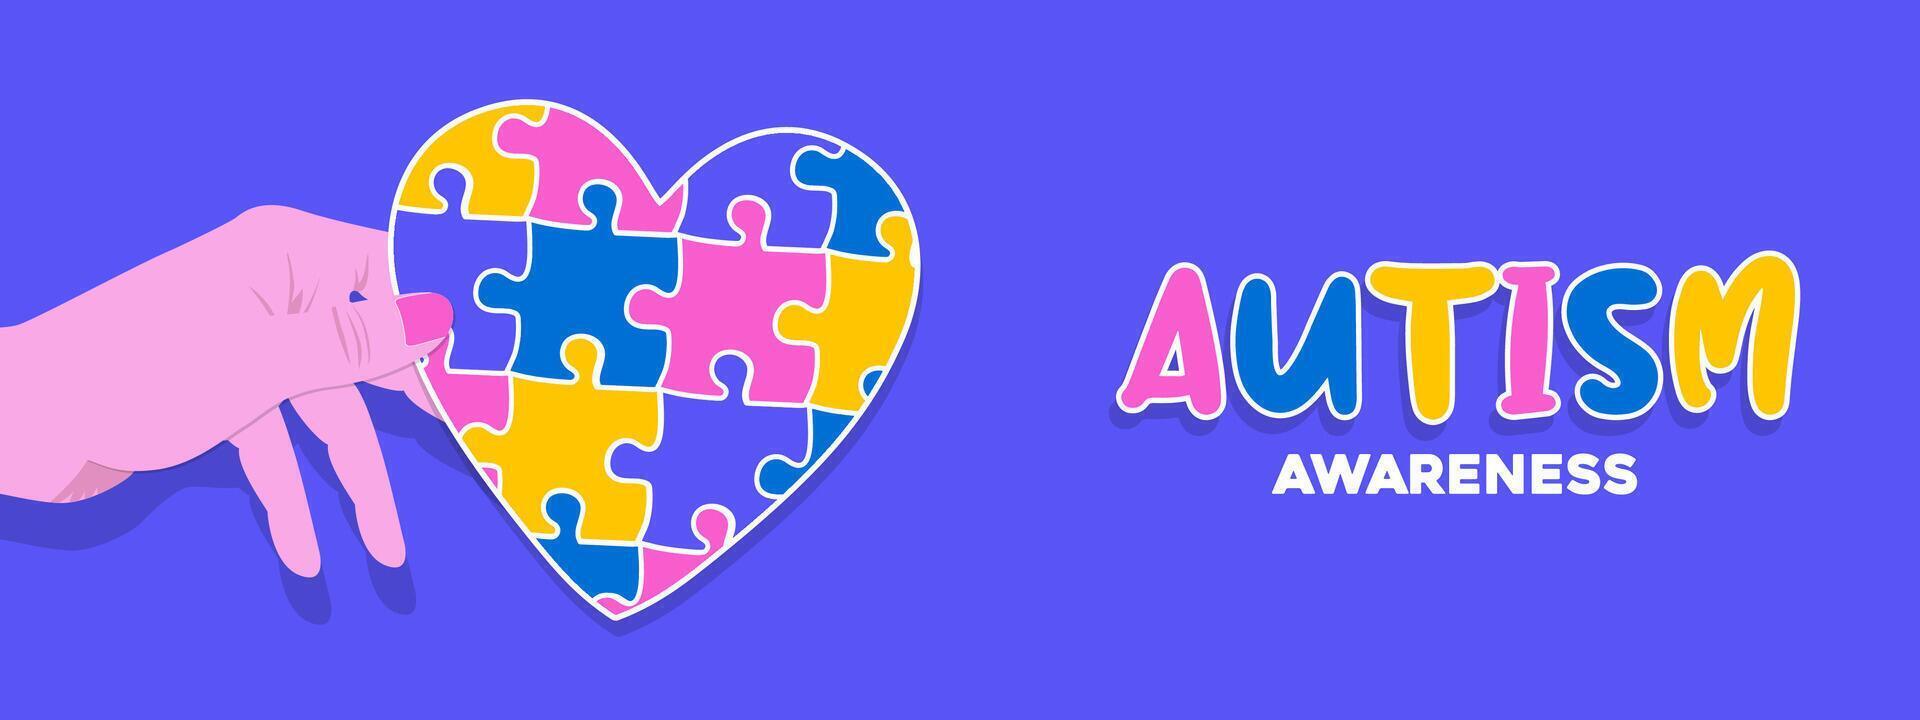 mano participación vistoso corazón rompecabezas vector diseño signo. símbolo de autismo. mundo autismo conciencia día.